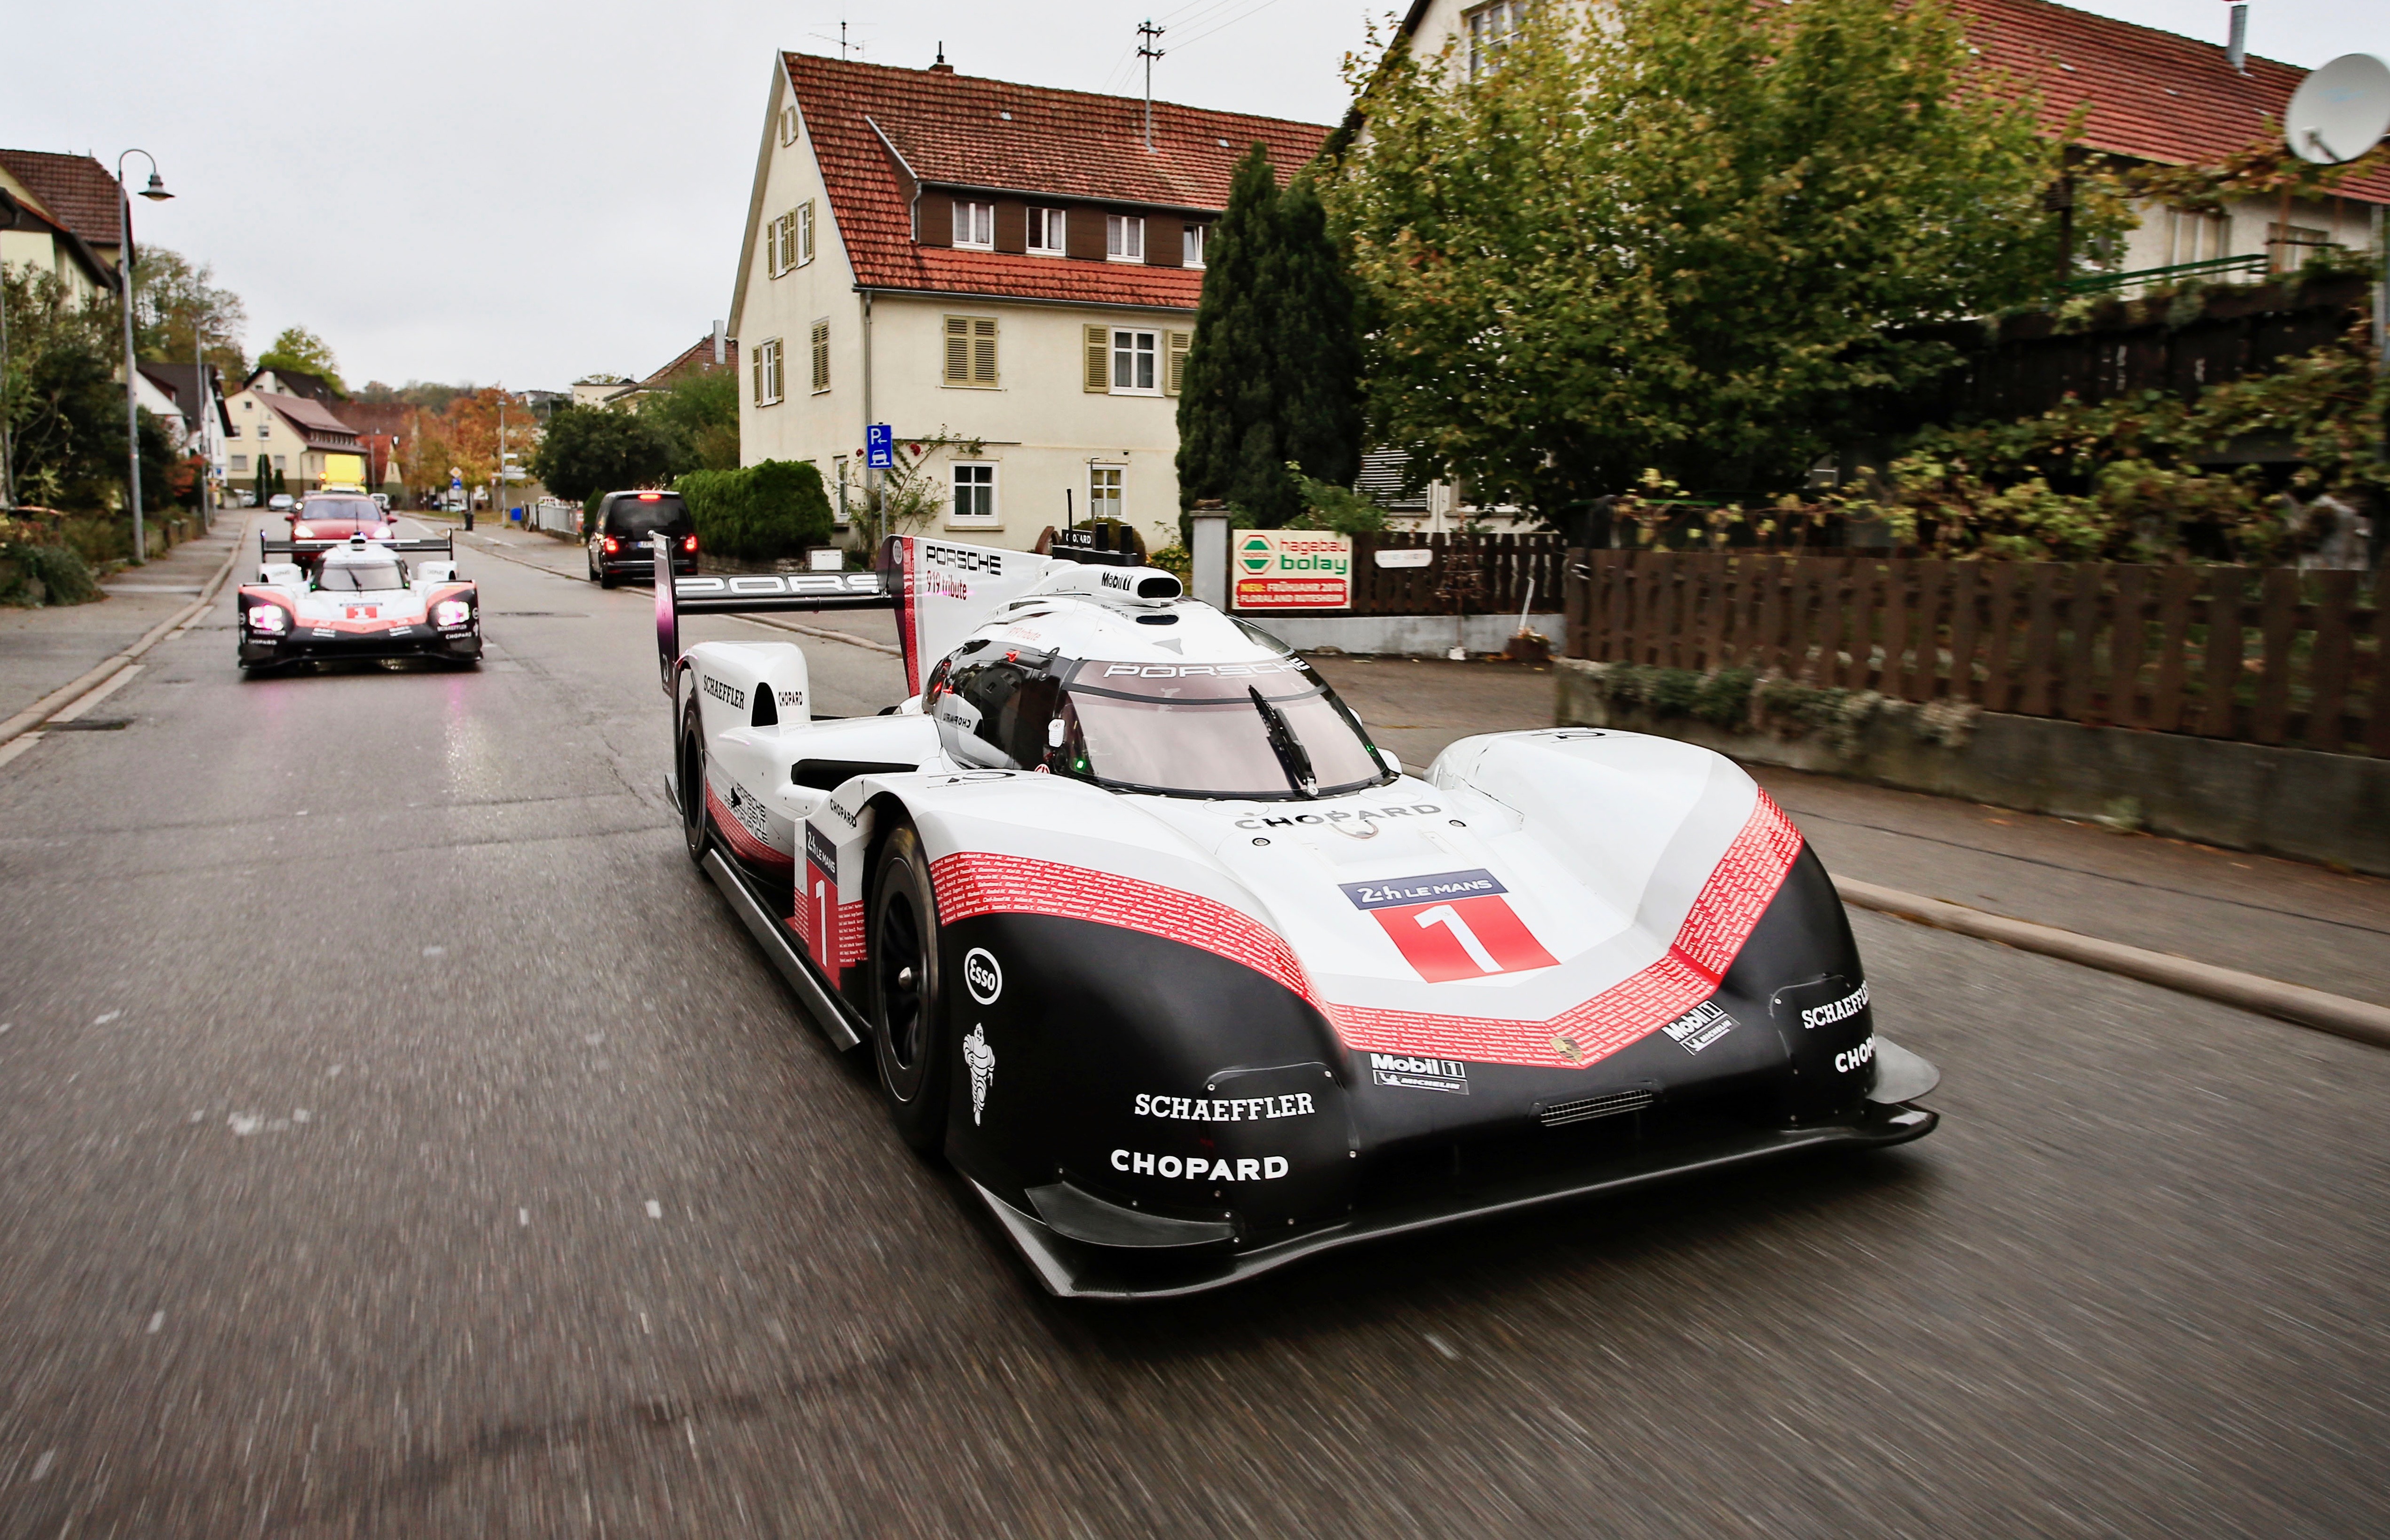 Le Manswinning Porsches racing cars driven on public roads